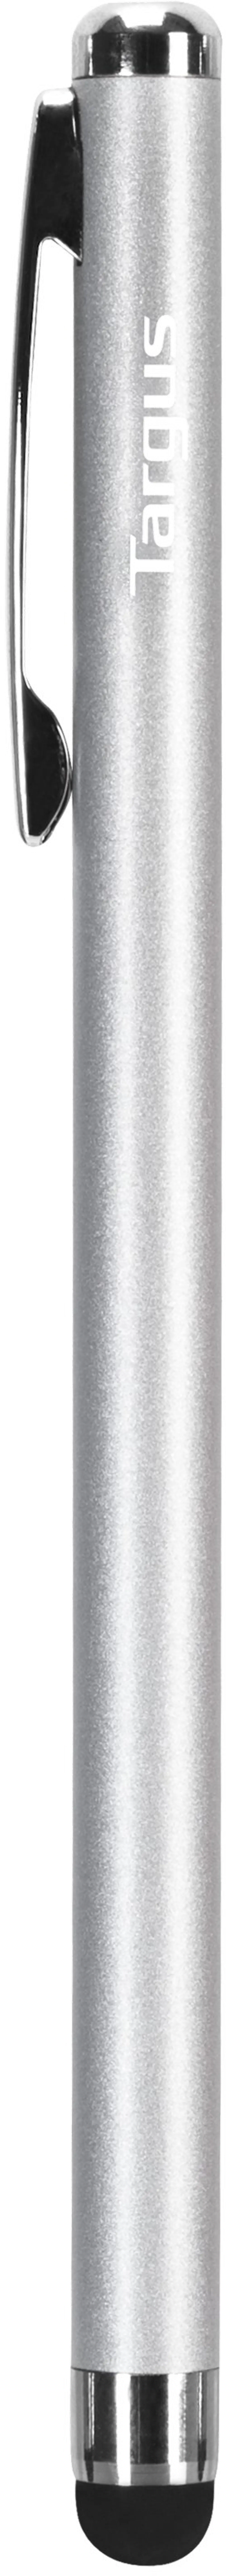 Targus Slim Stylus for Smartphones - Silver-1